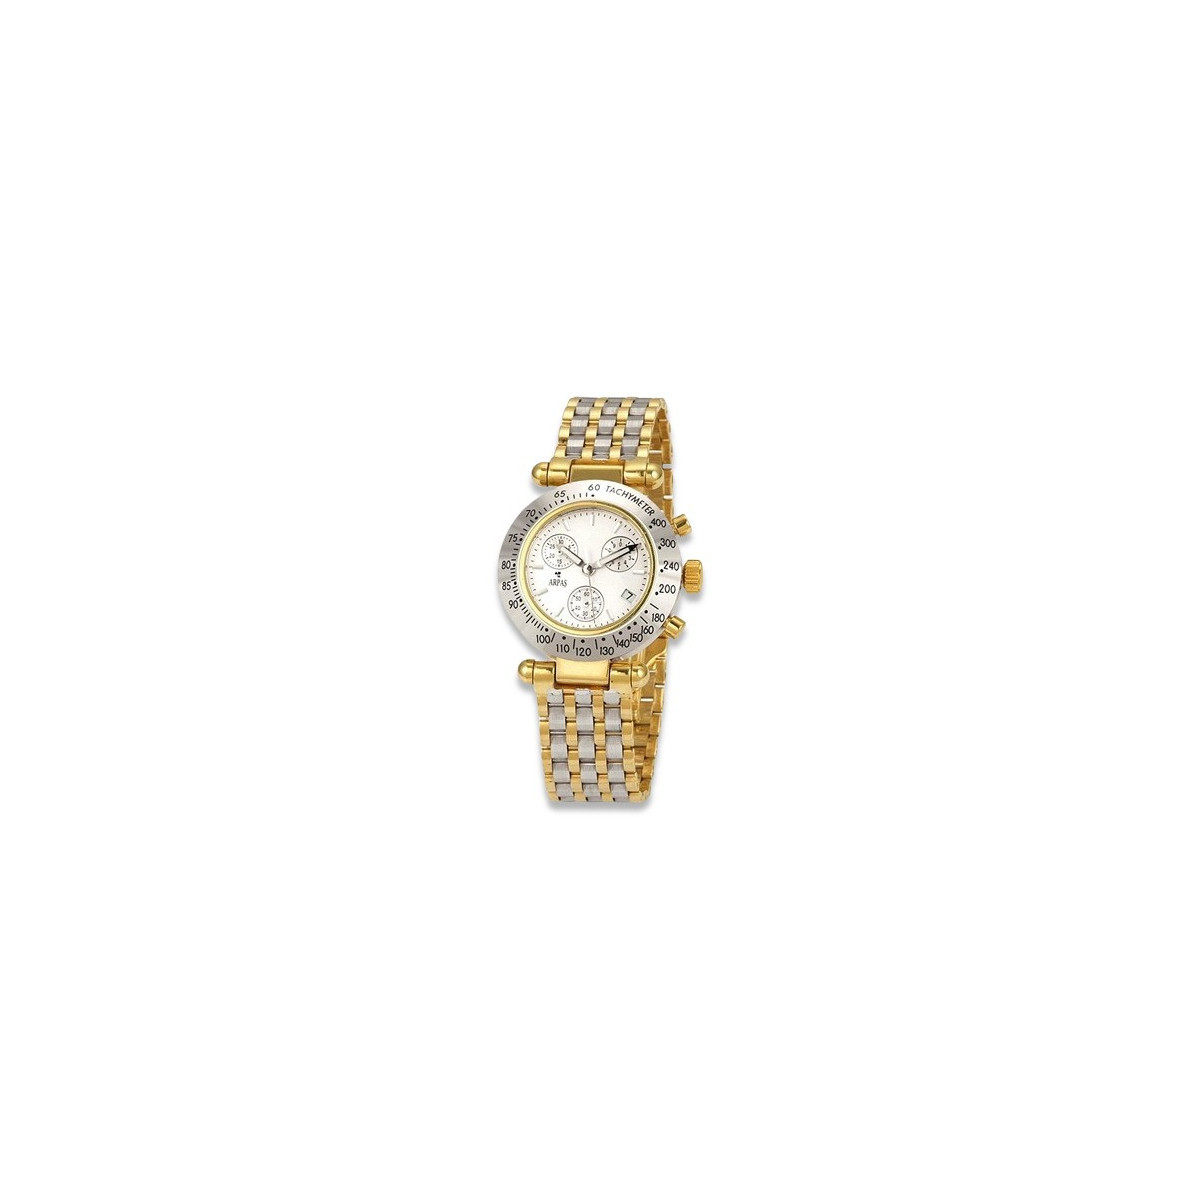 Италиански жълт златен мъжки часовник Geneve mw068y